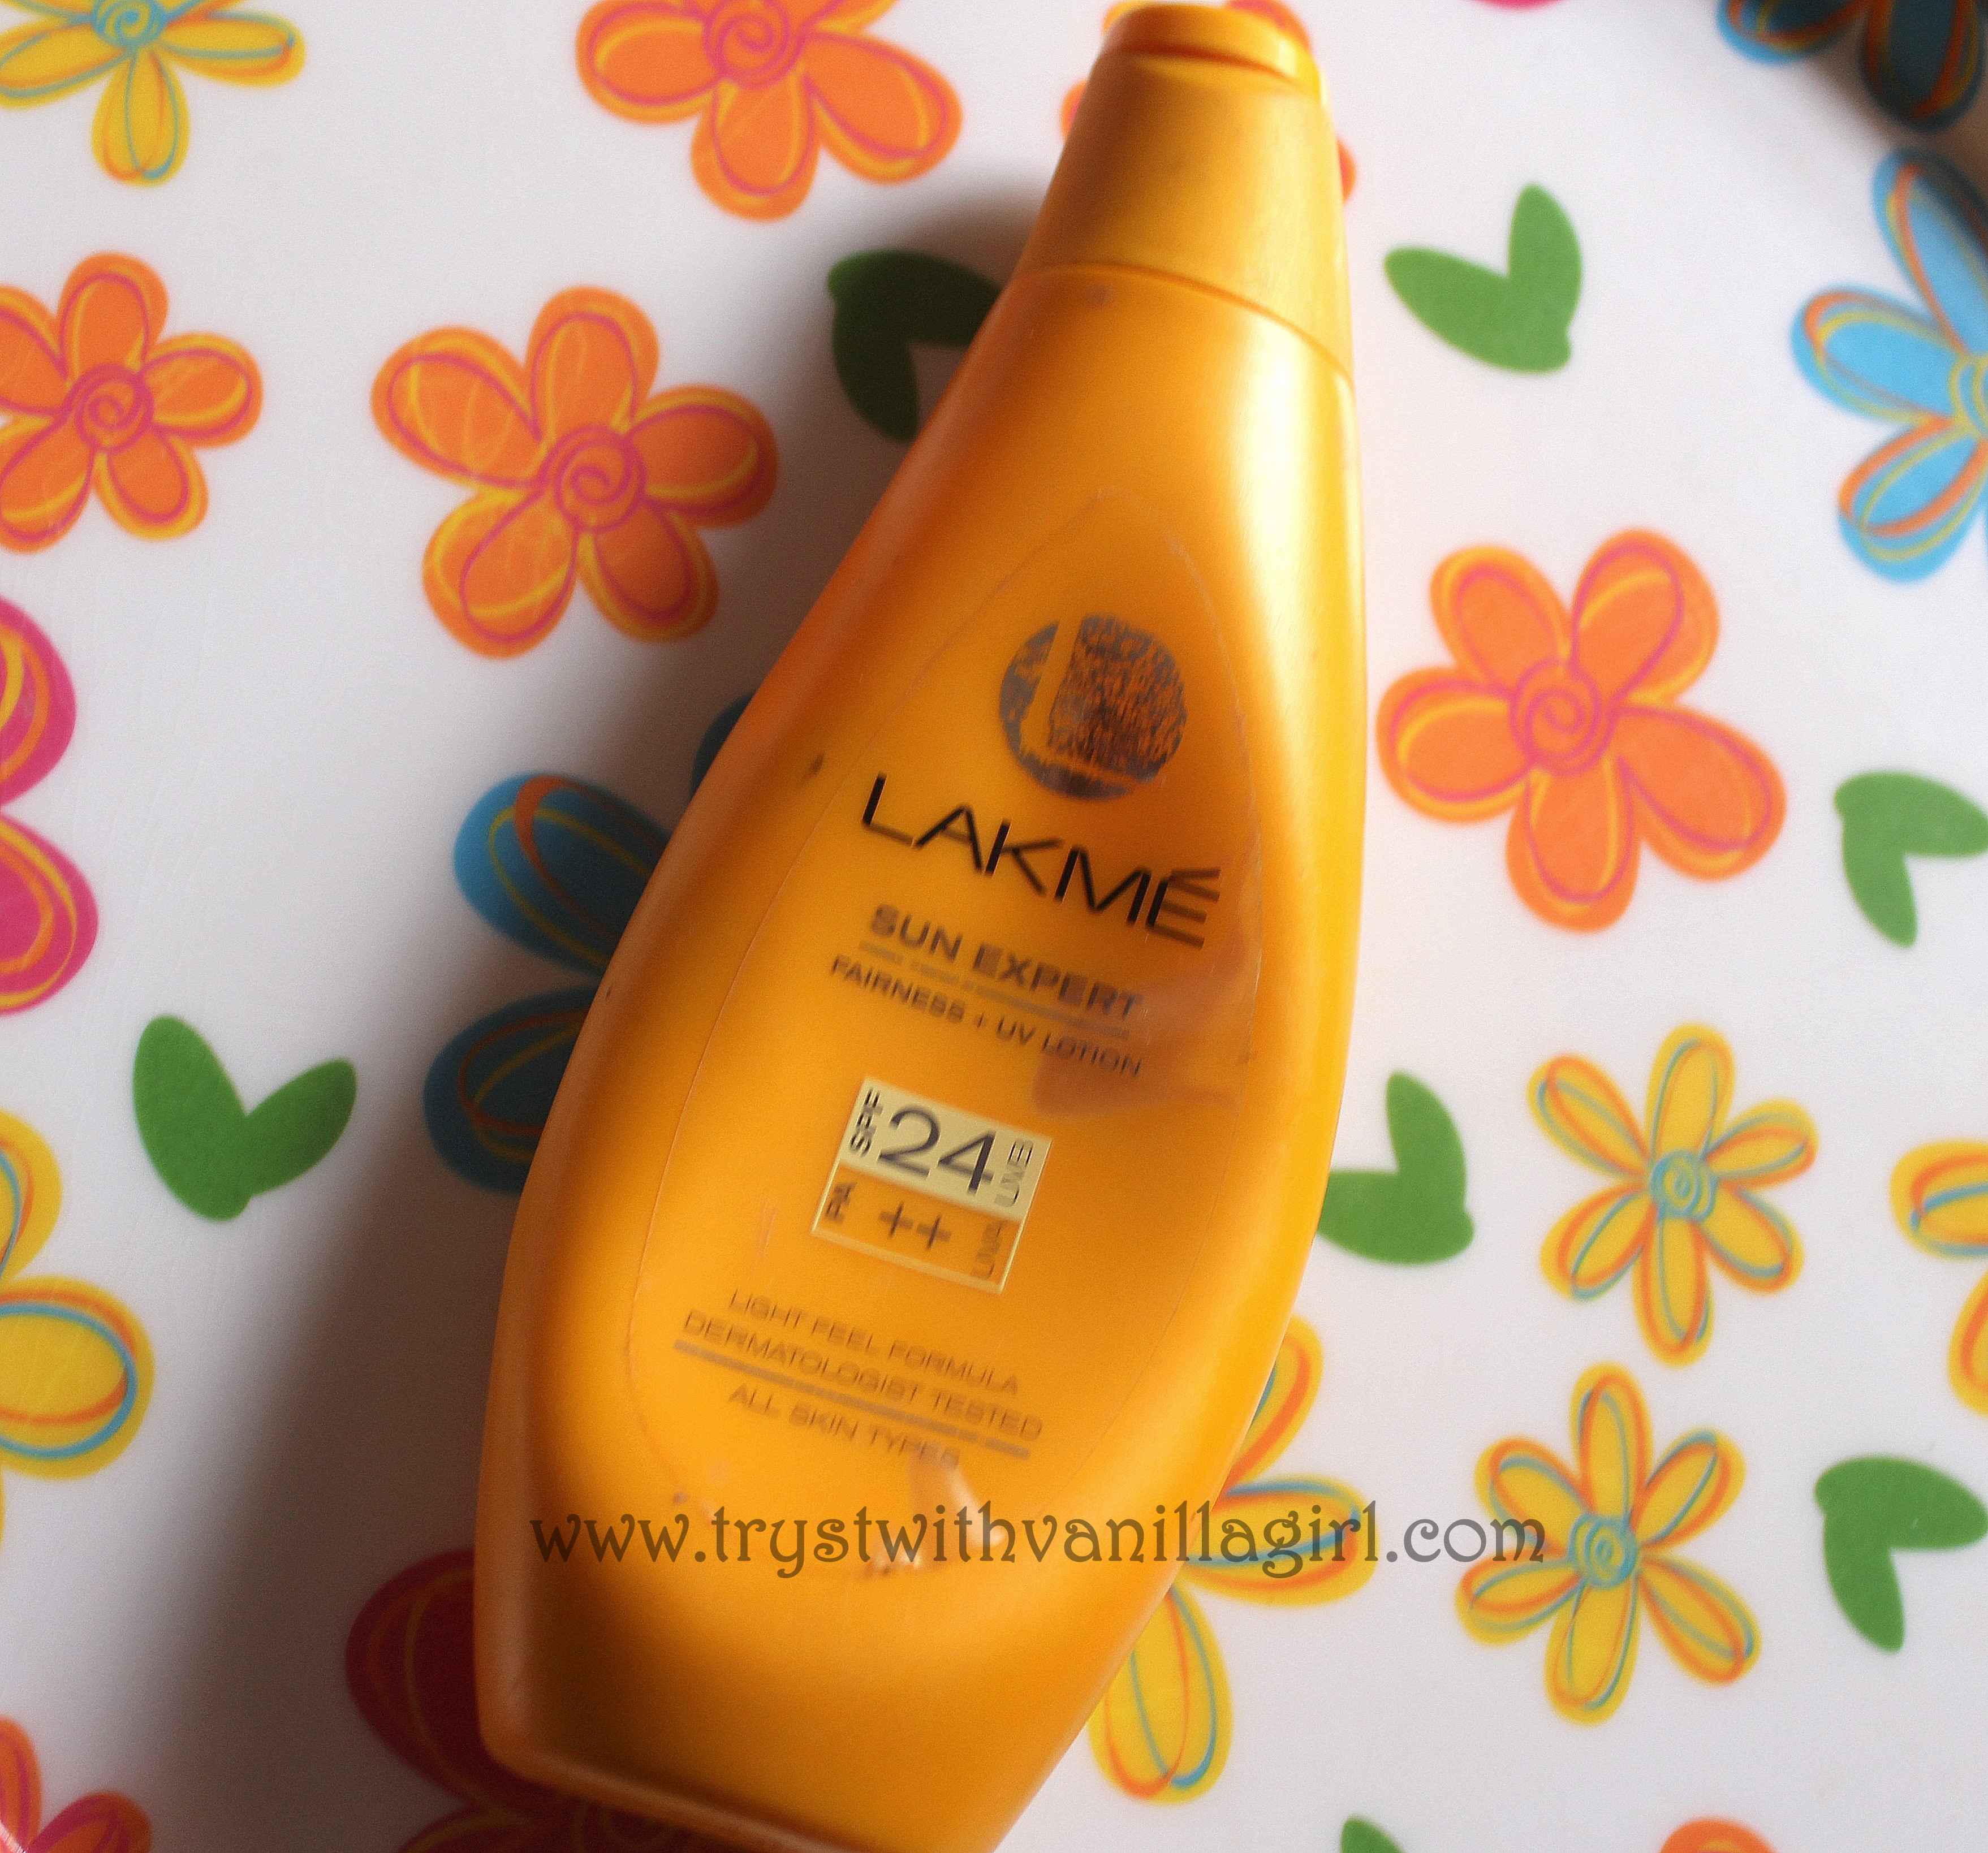 Lakme Sun Expert Fairness+ UV Lotion SPF 24 PA ++ Review